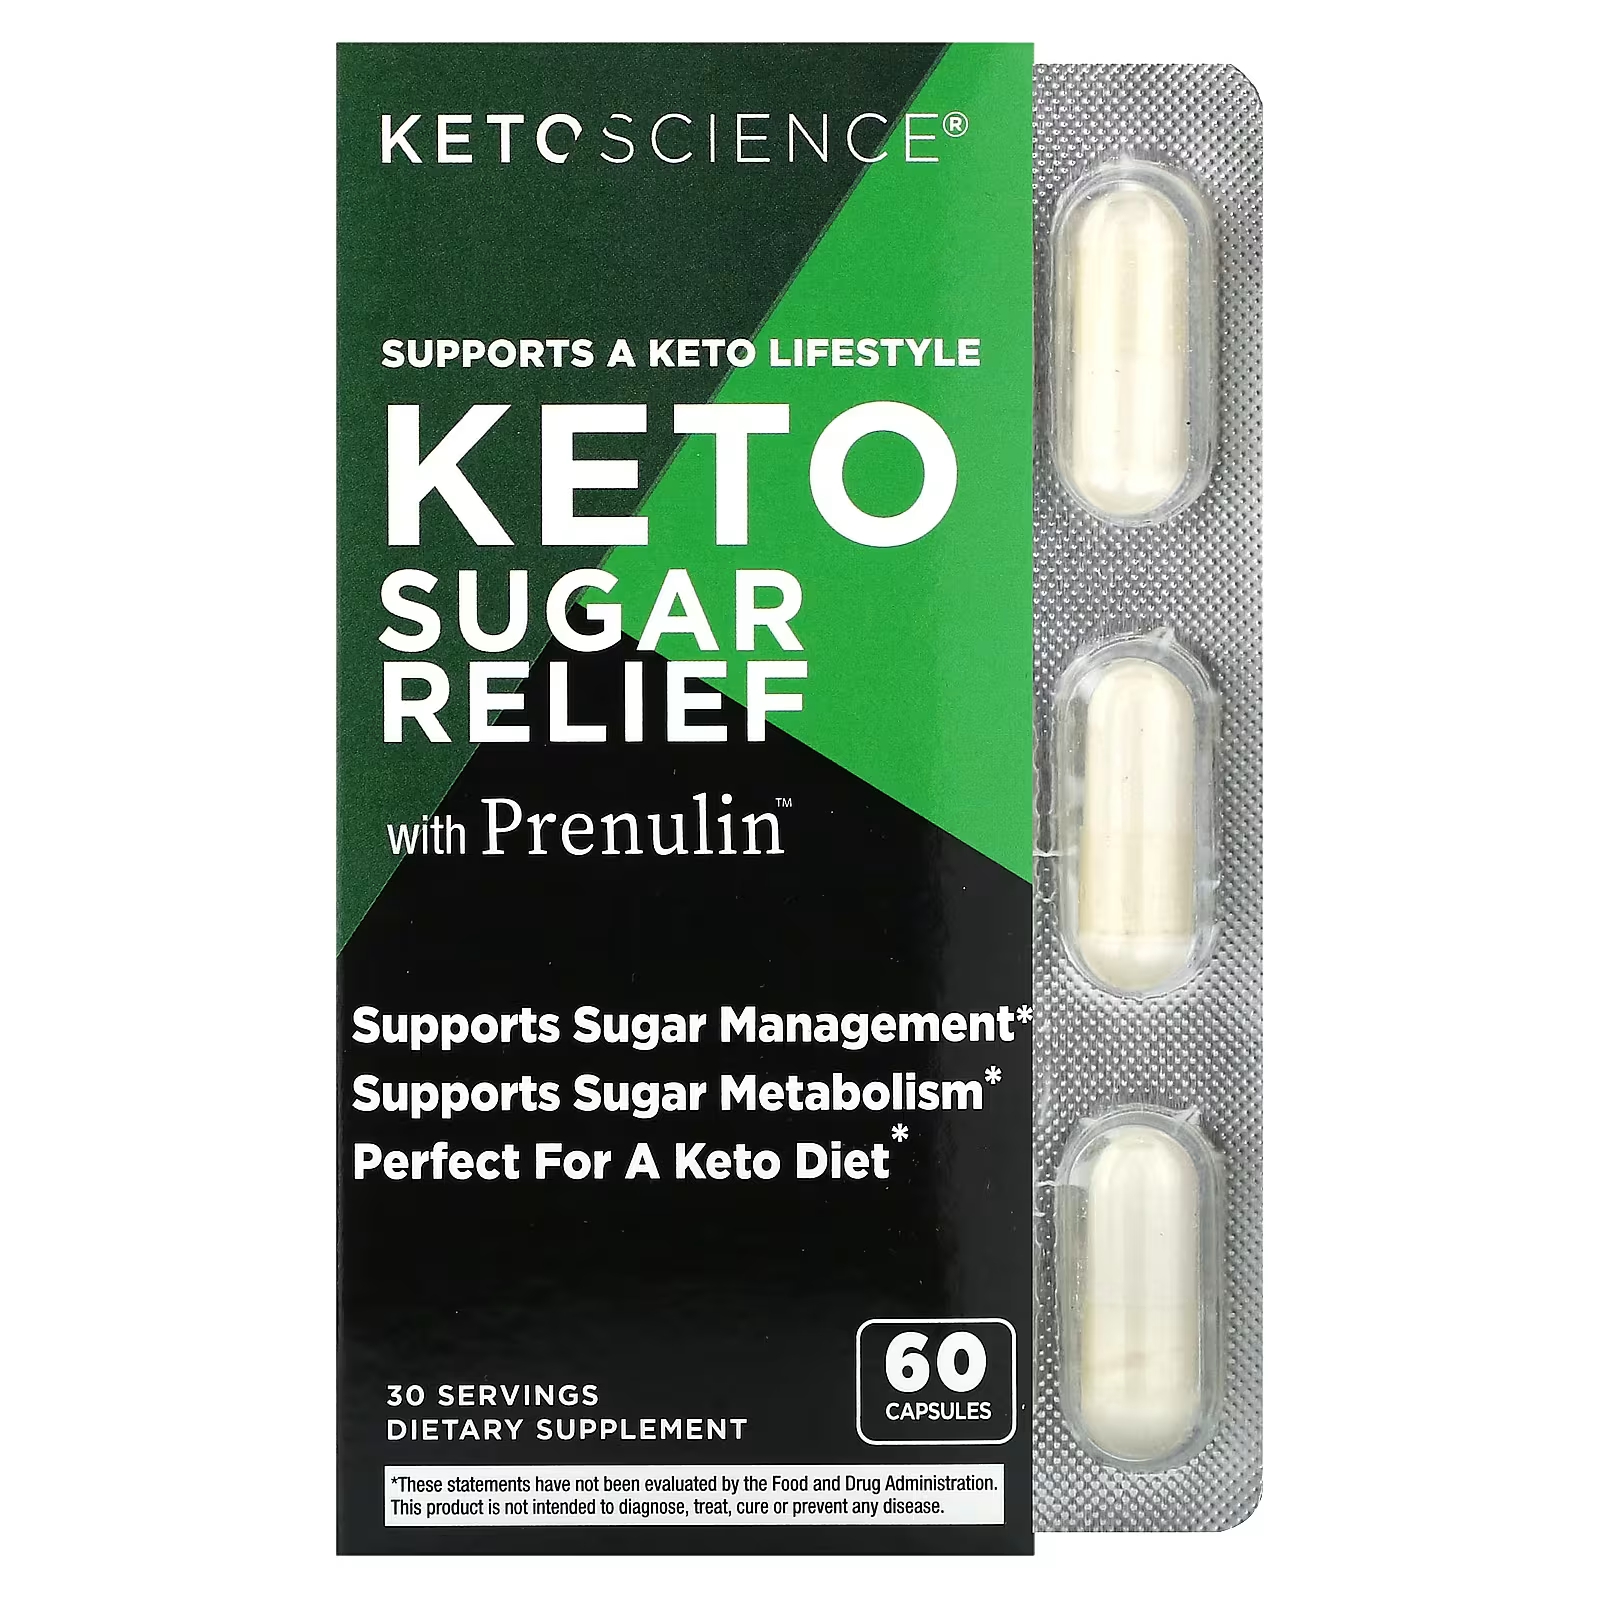 Пищевая добавка Keto Science Keto Sugar Relief с пренулином, 60 капсул keto science keto sugar relief с пренулином 60 капсул